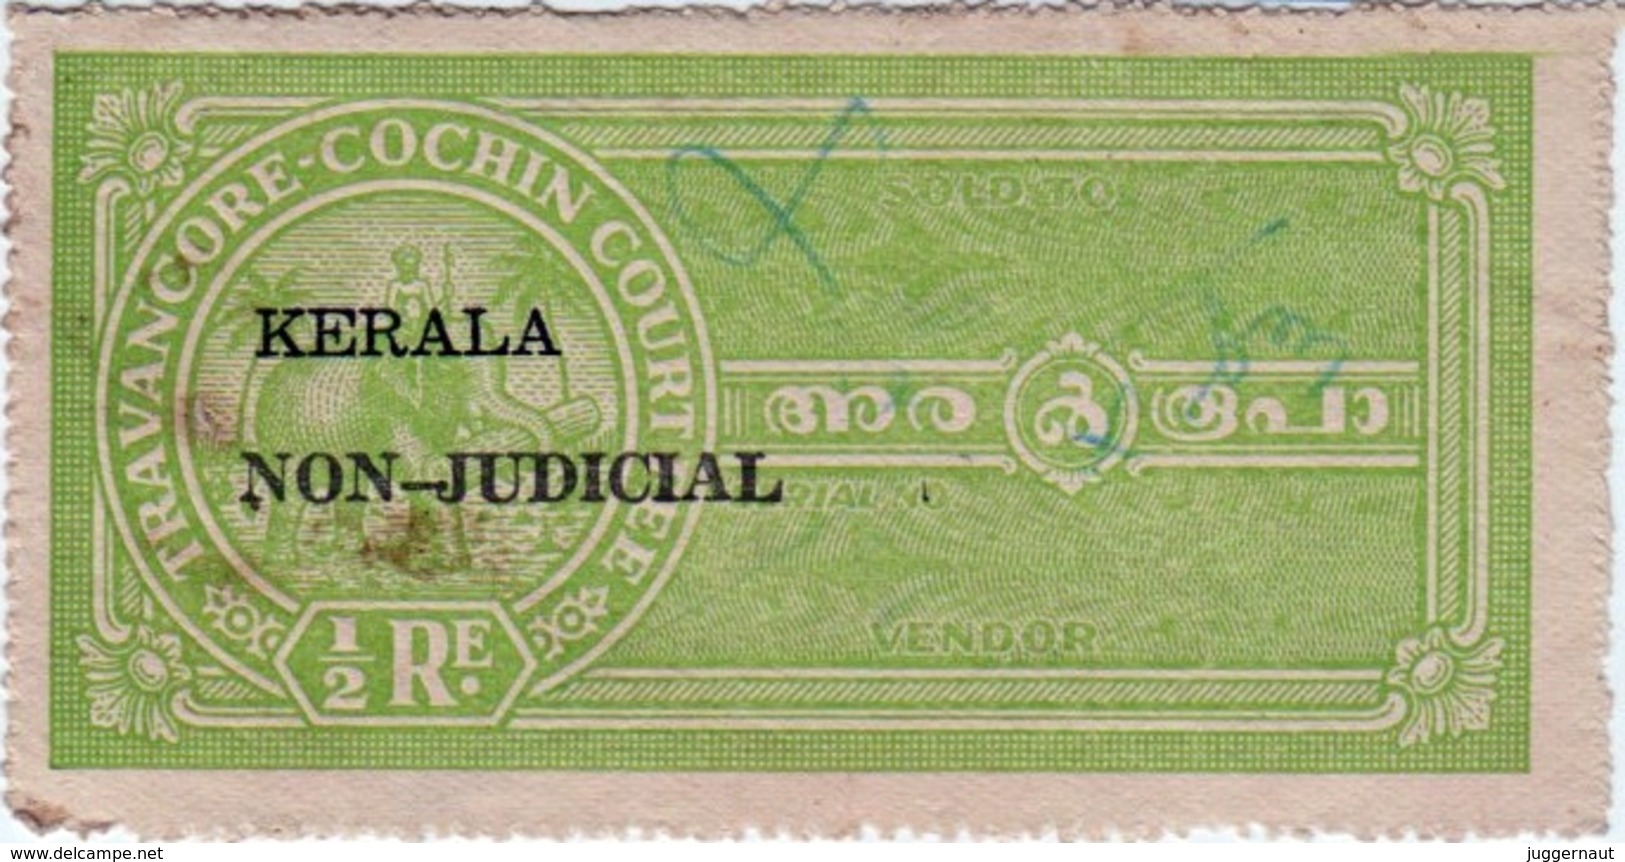 Travancore-Cochin/KERALA INDIA 1/2-Rupee COURT FEE Stamp 1949-50 GOOD/USED - Travancore-Cochin